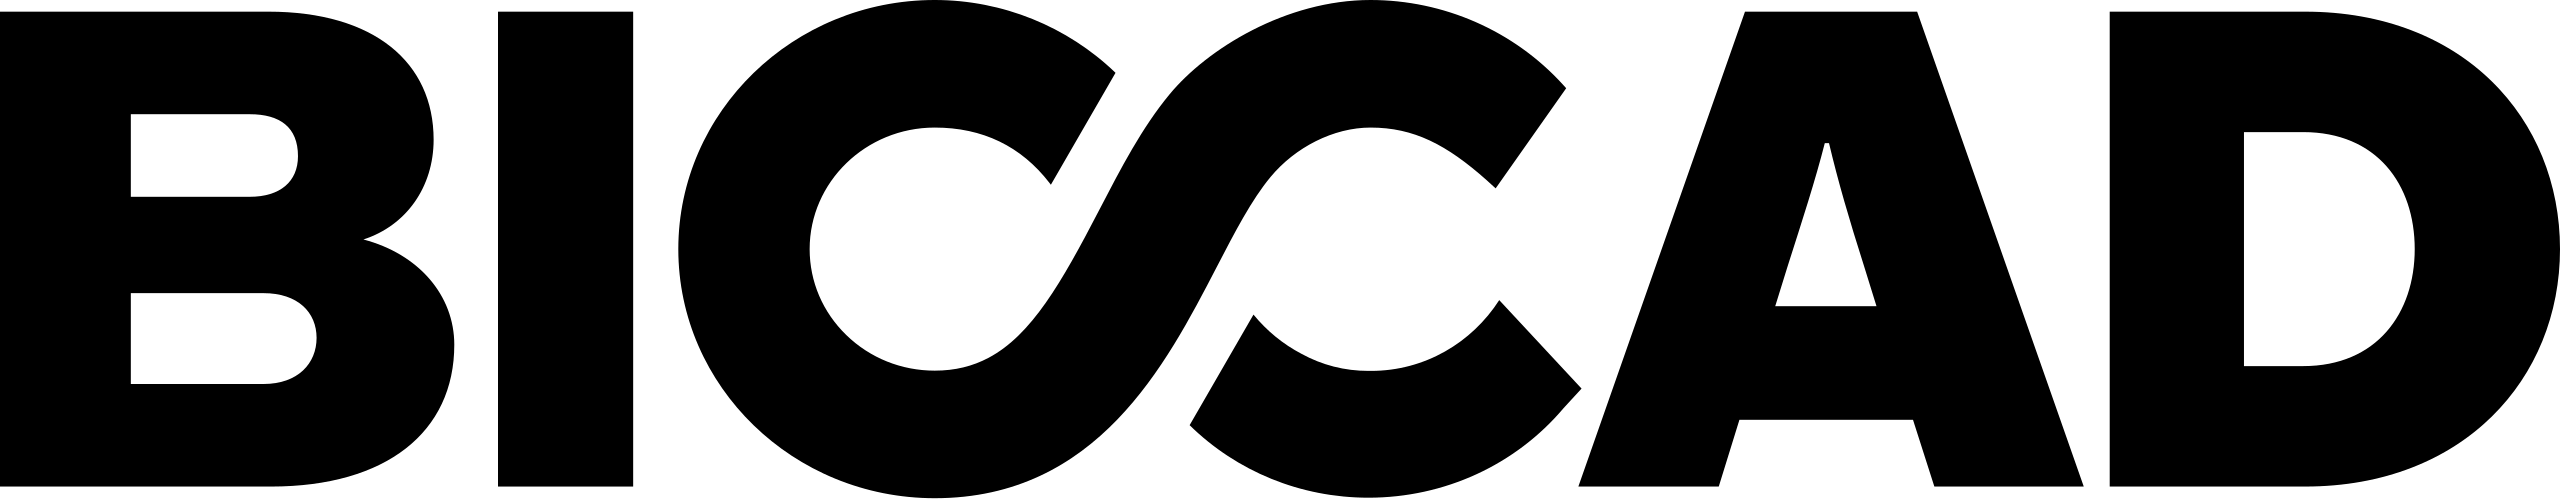 Biocad_Logo.svg